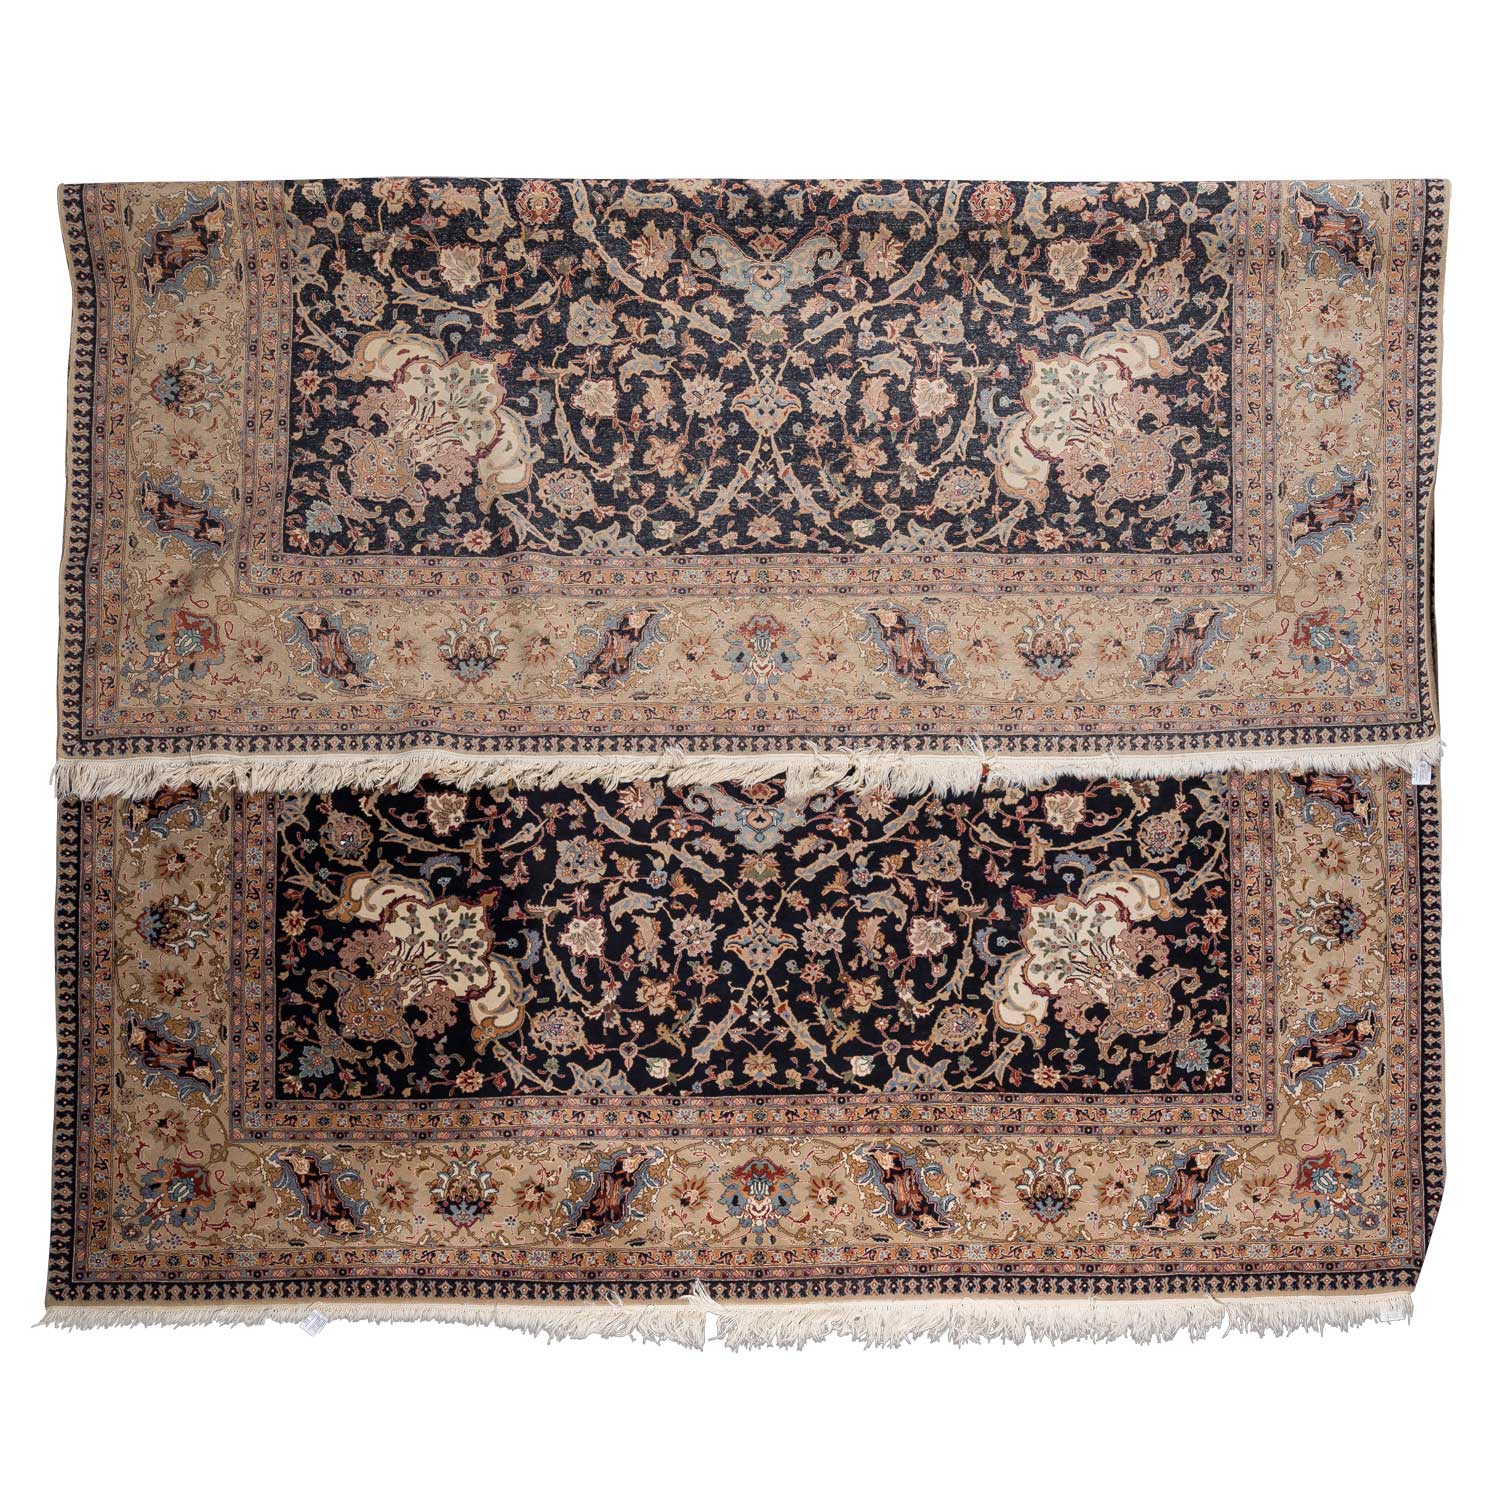 Orientteppich. DESIRA-ALBAN/ALBANIEN, 20. Jh., 400x300 cm. - Image 2 of 3